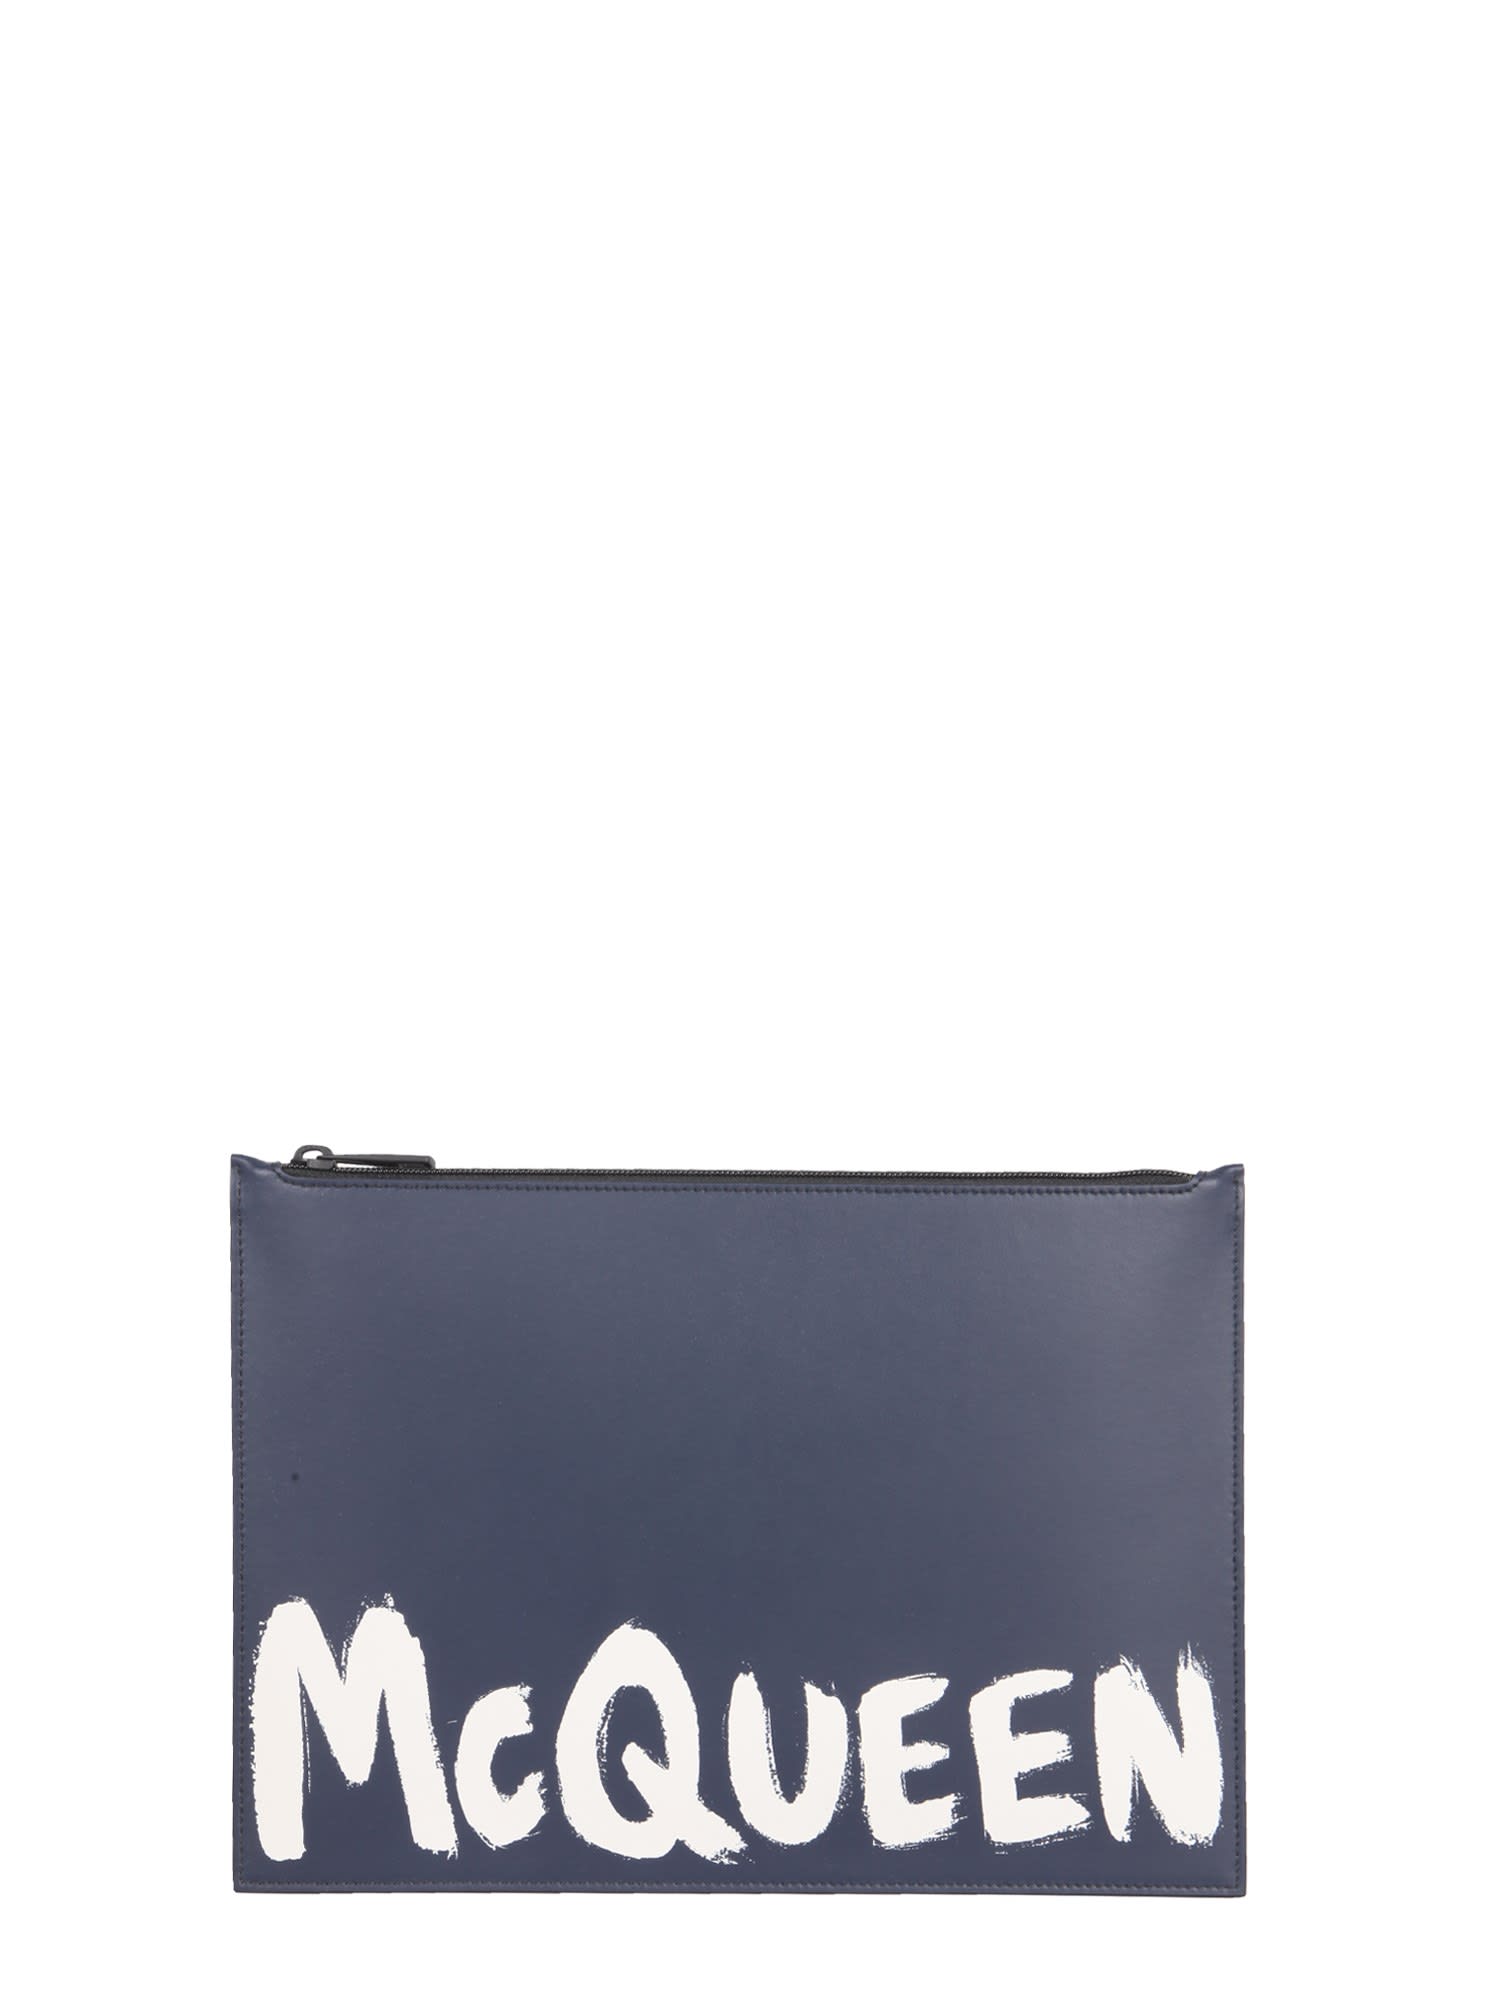 Alexander McQueen Leather Clutch